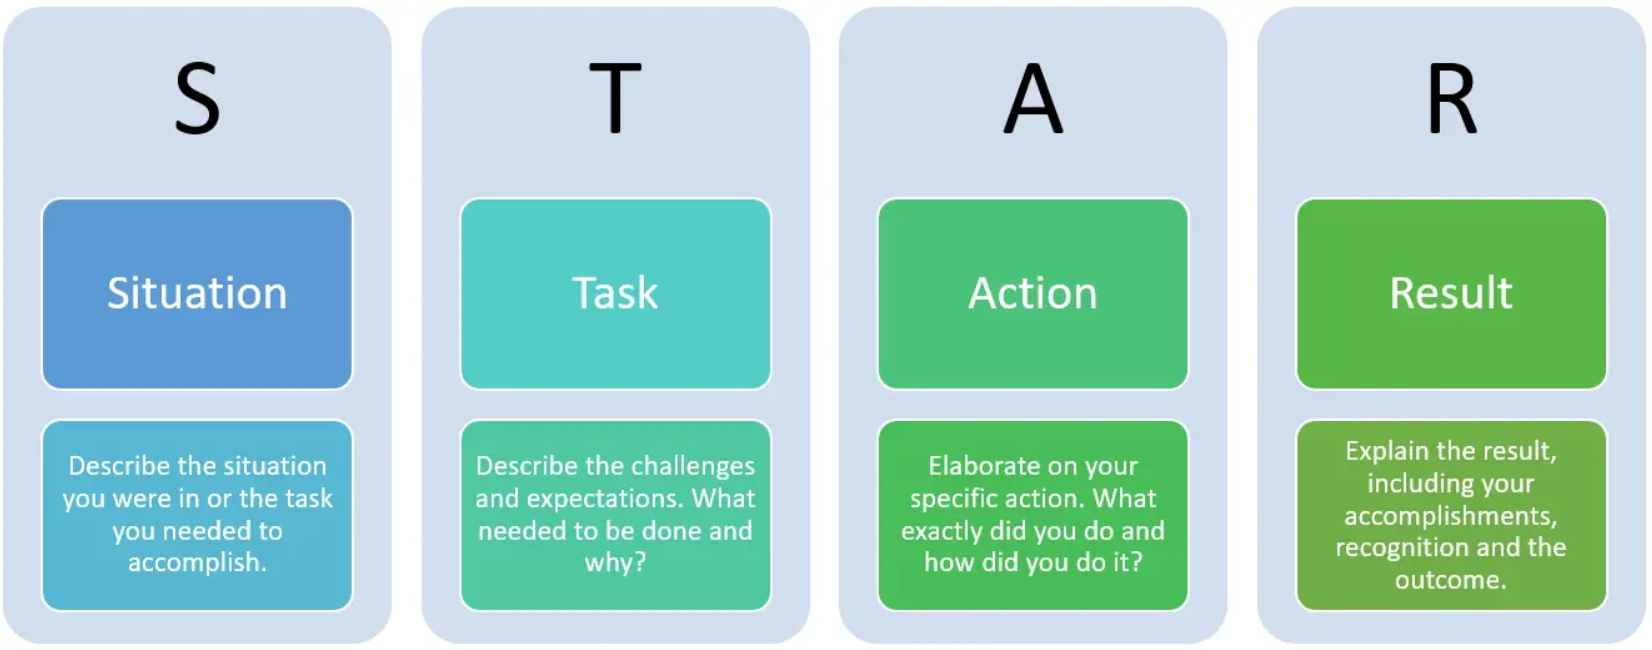 STAR method - Situation, Task, Action, Result